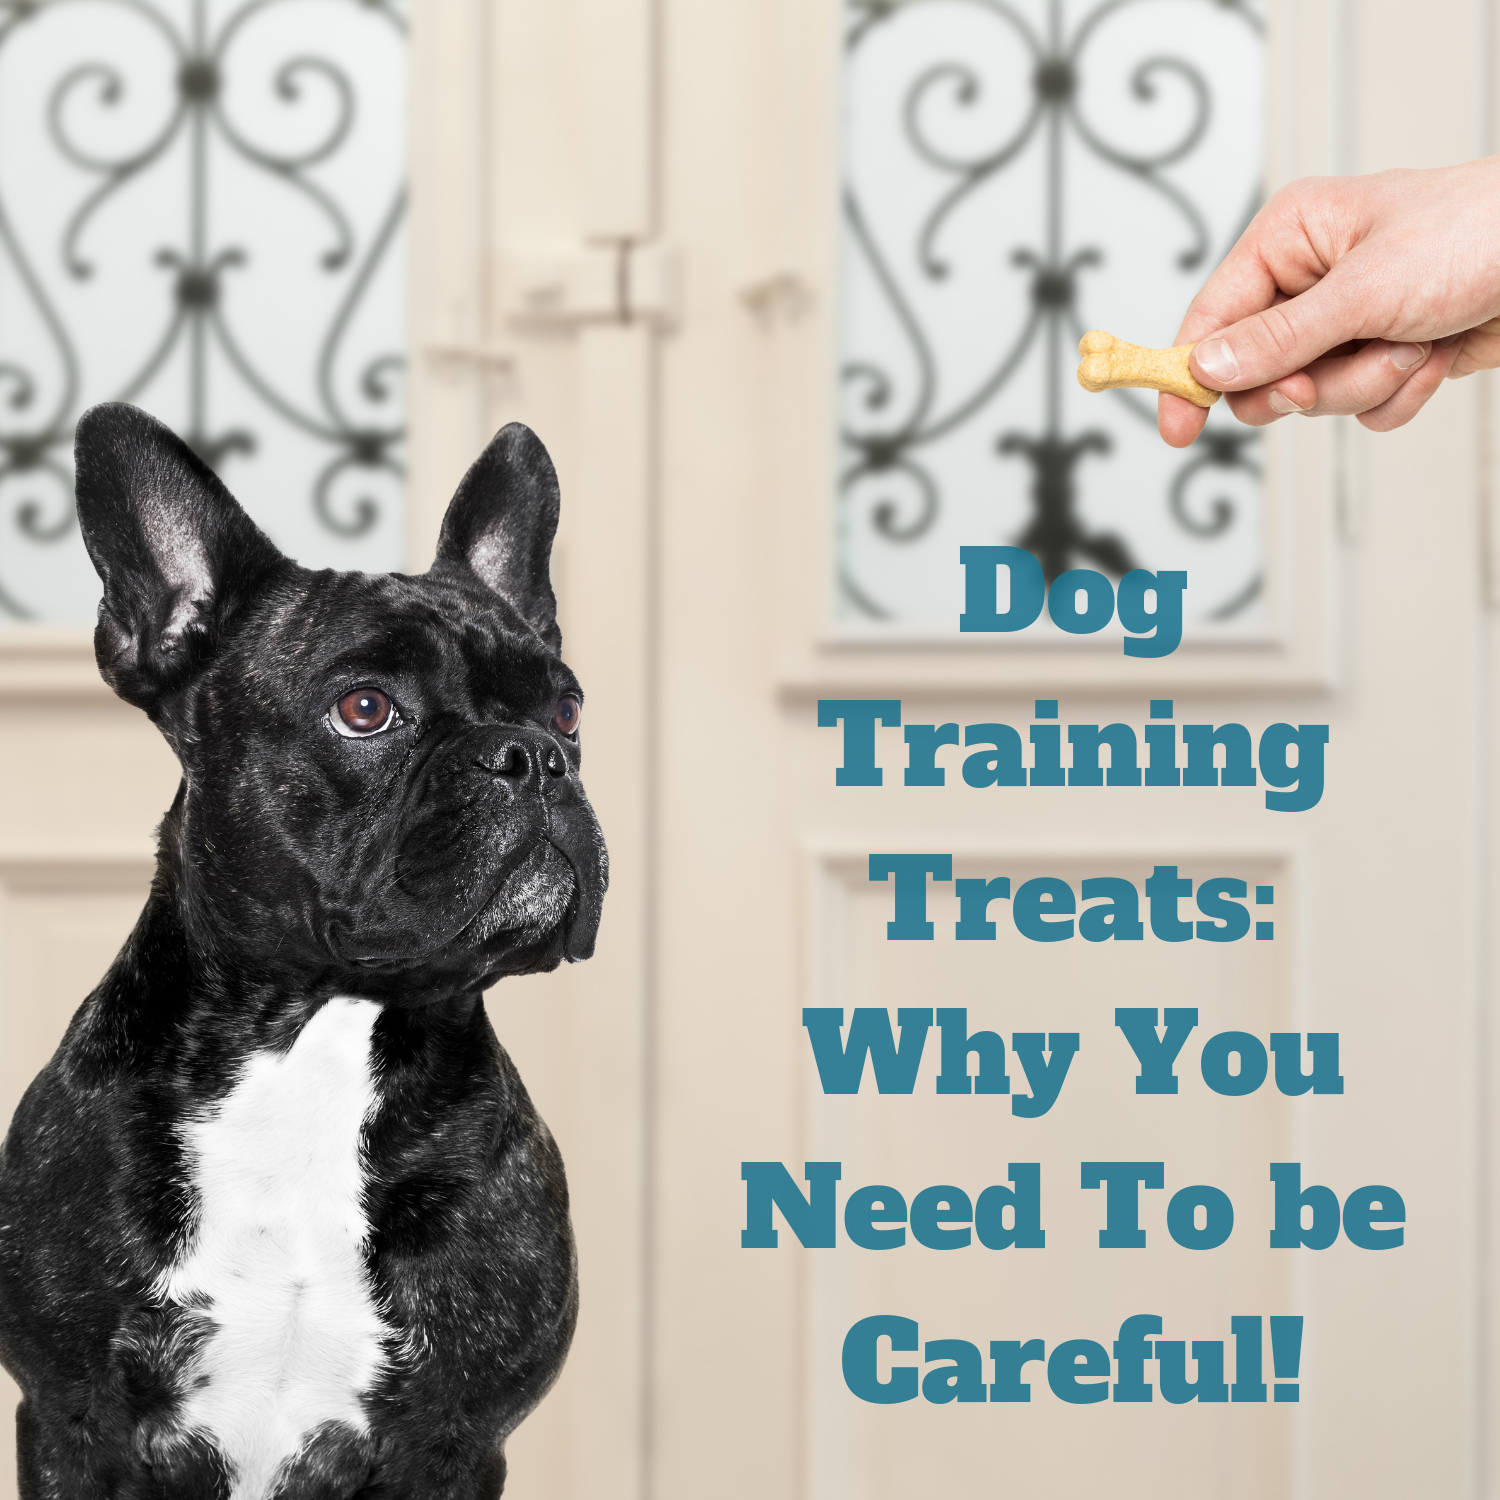 Dog training treats